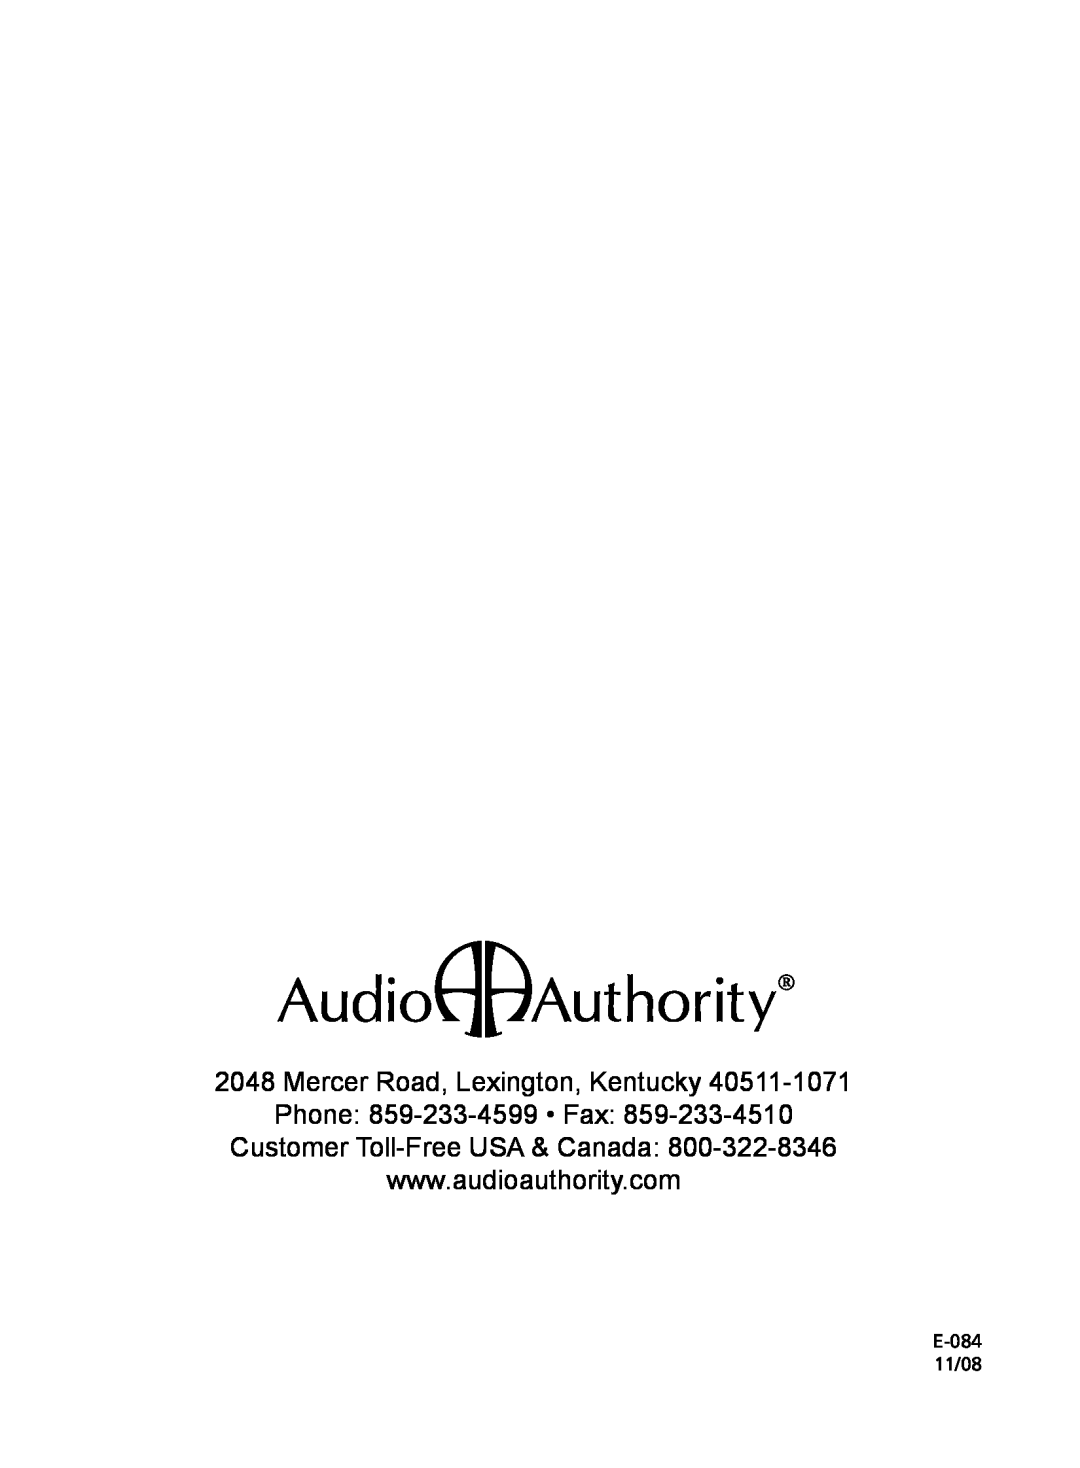 Audio Authority EDP-11 user manual Mercer Road, Lexington, Kentucky Phone 859-233-4599 Fax, Customer Toll-Free USA & Canada 